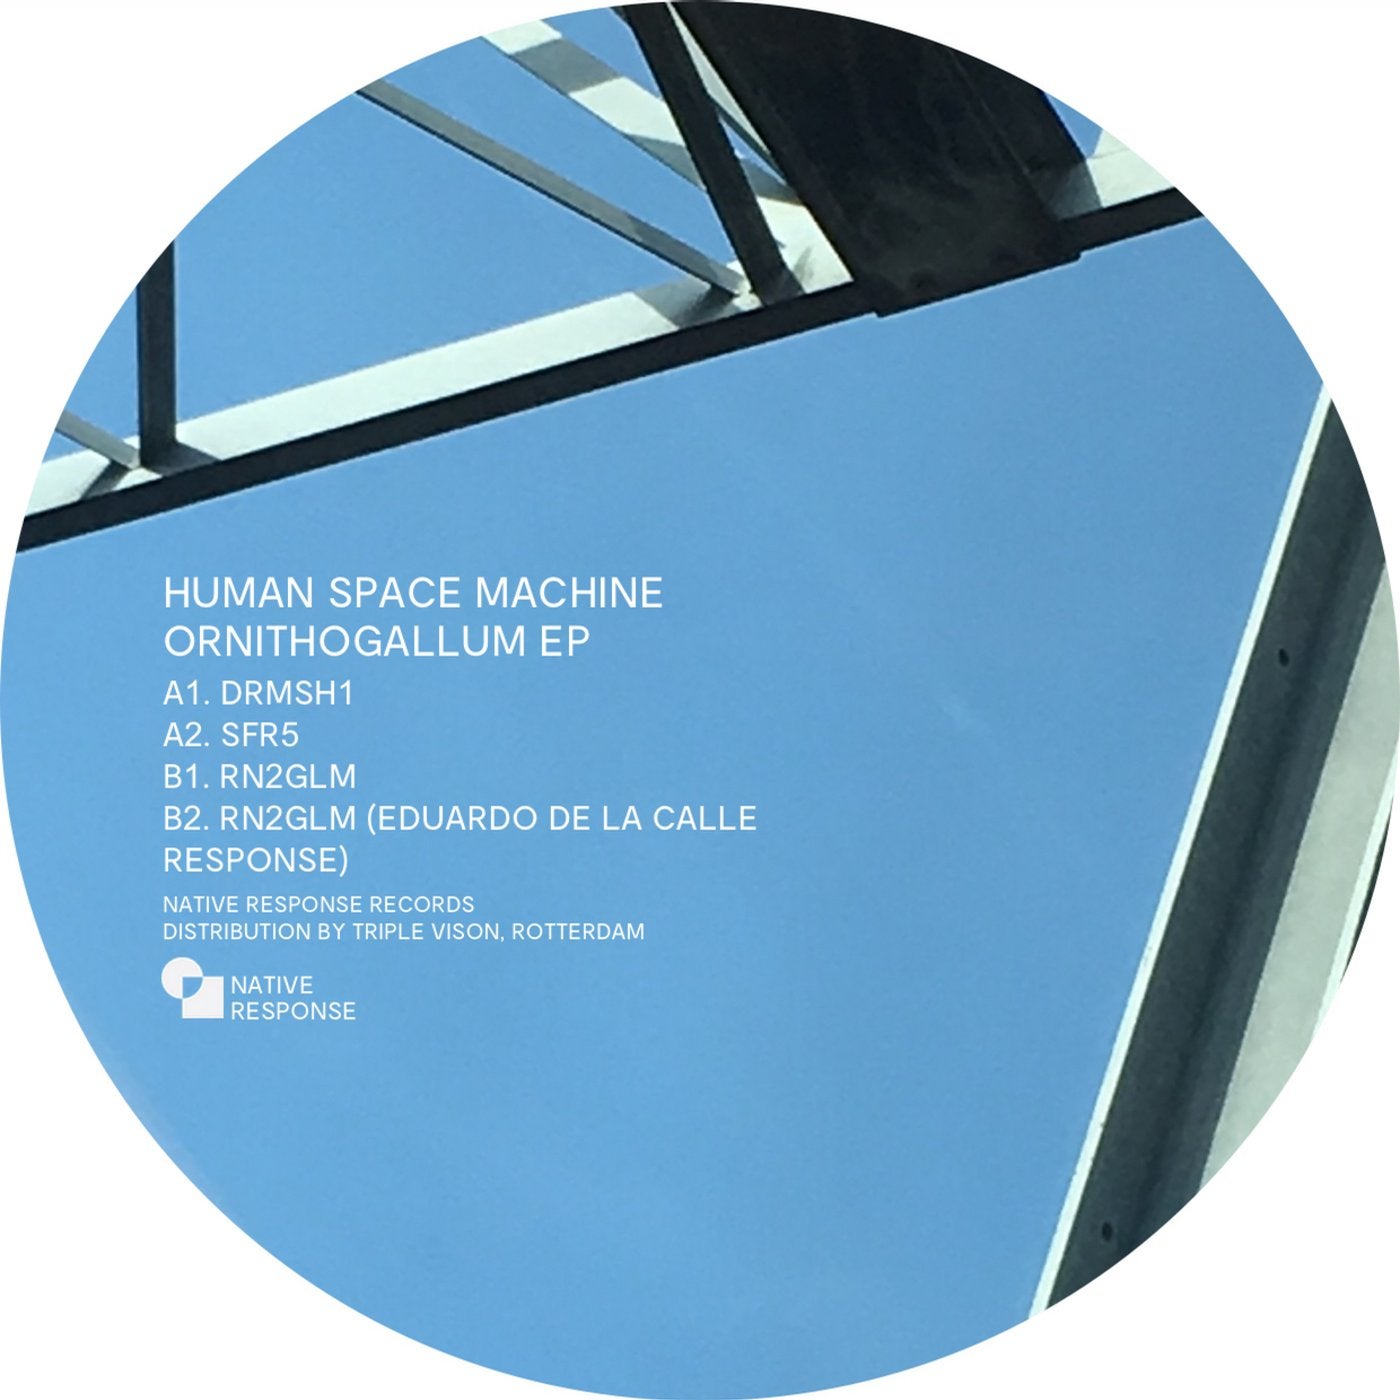 Ornithogallum EP - Digital Version